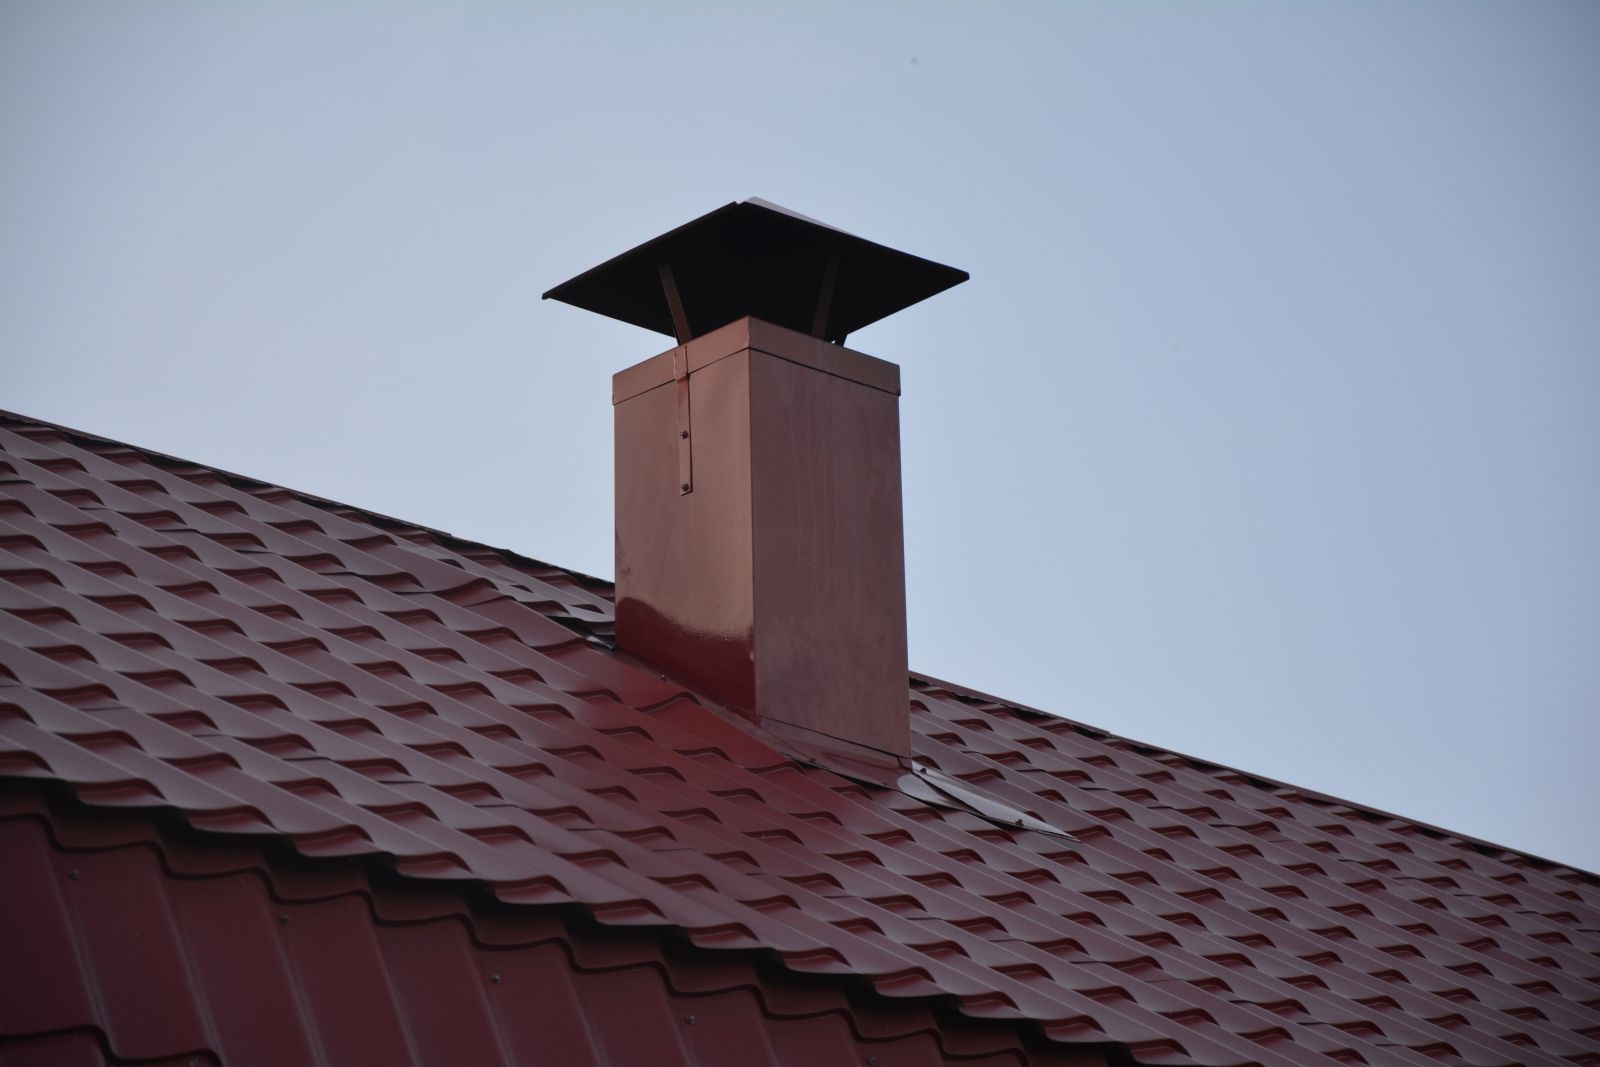  трубы дымохода на крыше профнастилом:  трубы на крыше .